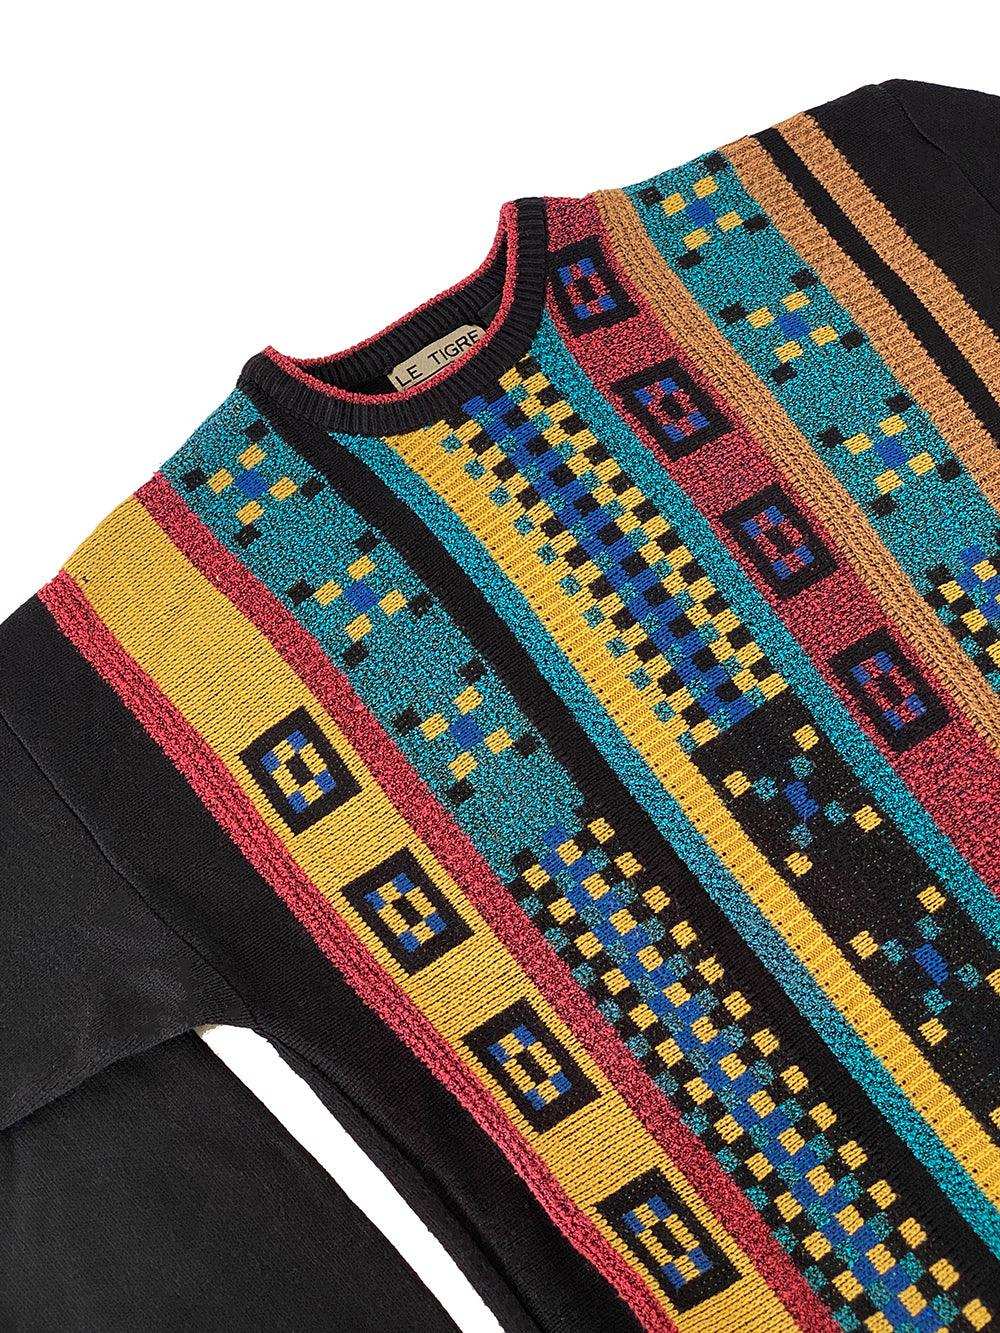 Vintage 80s Le Tigre Geometric Patterned Knit Sweater